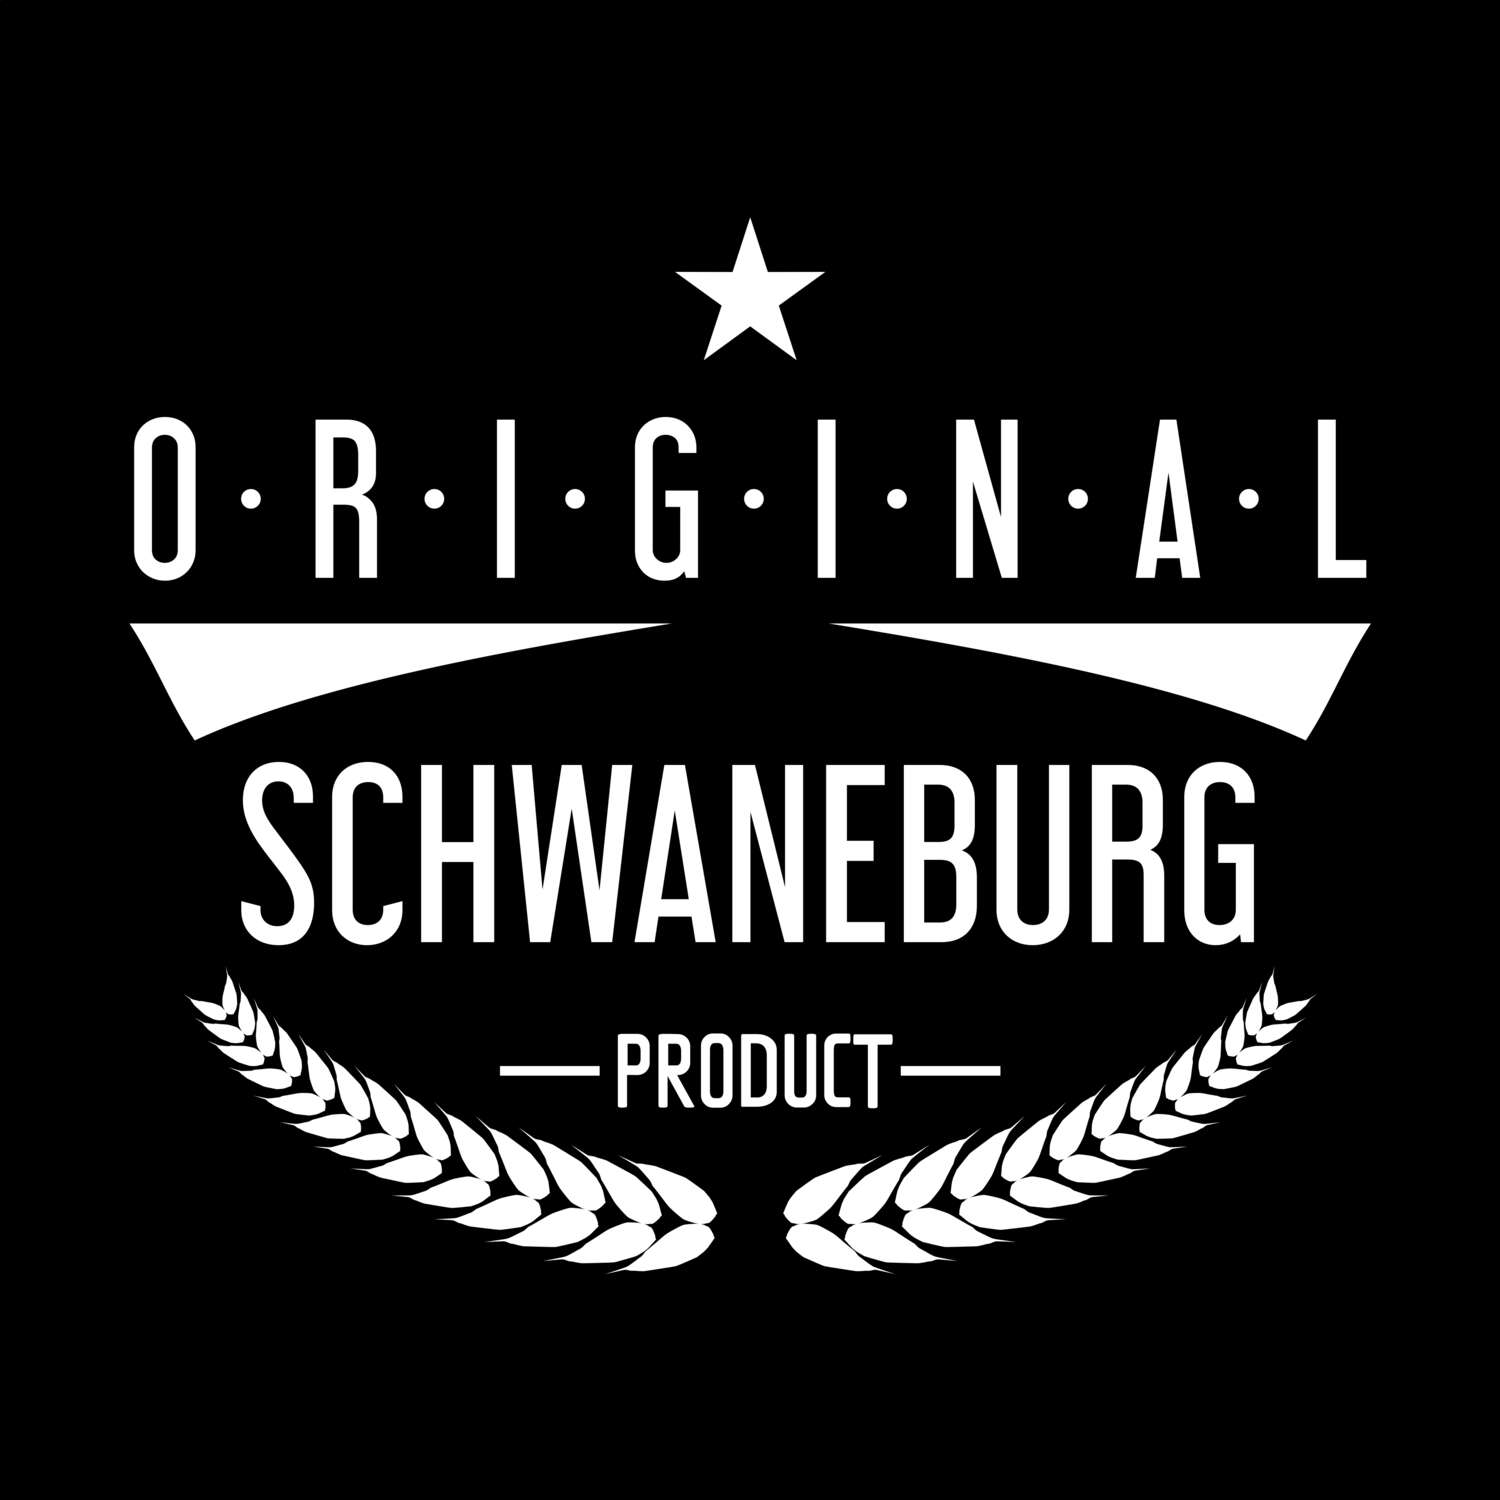 Schwaneburg T-Shirt »Original Product«